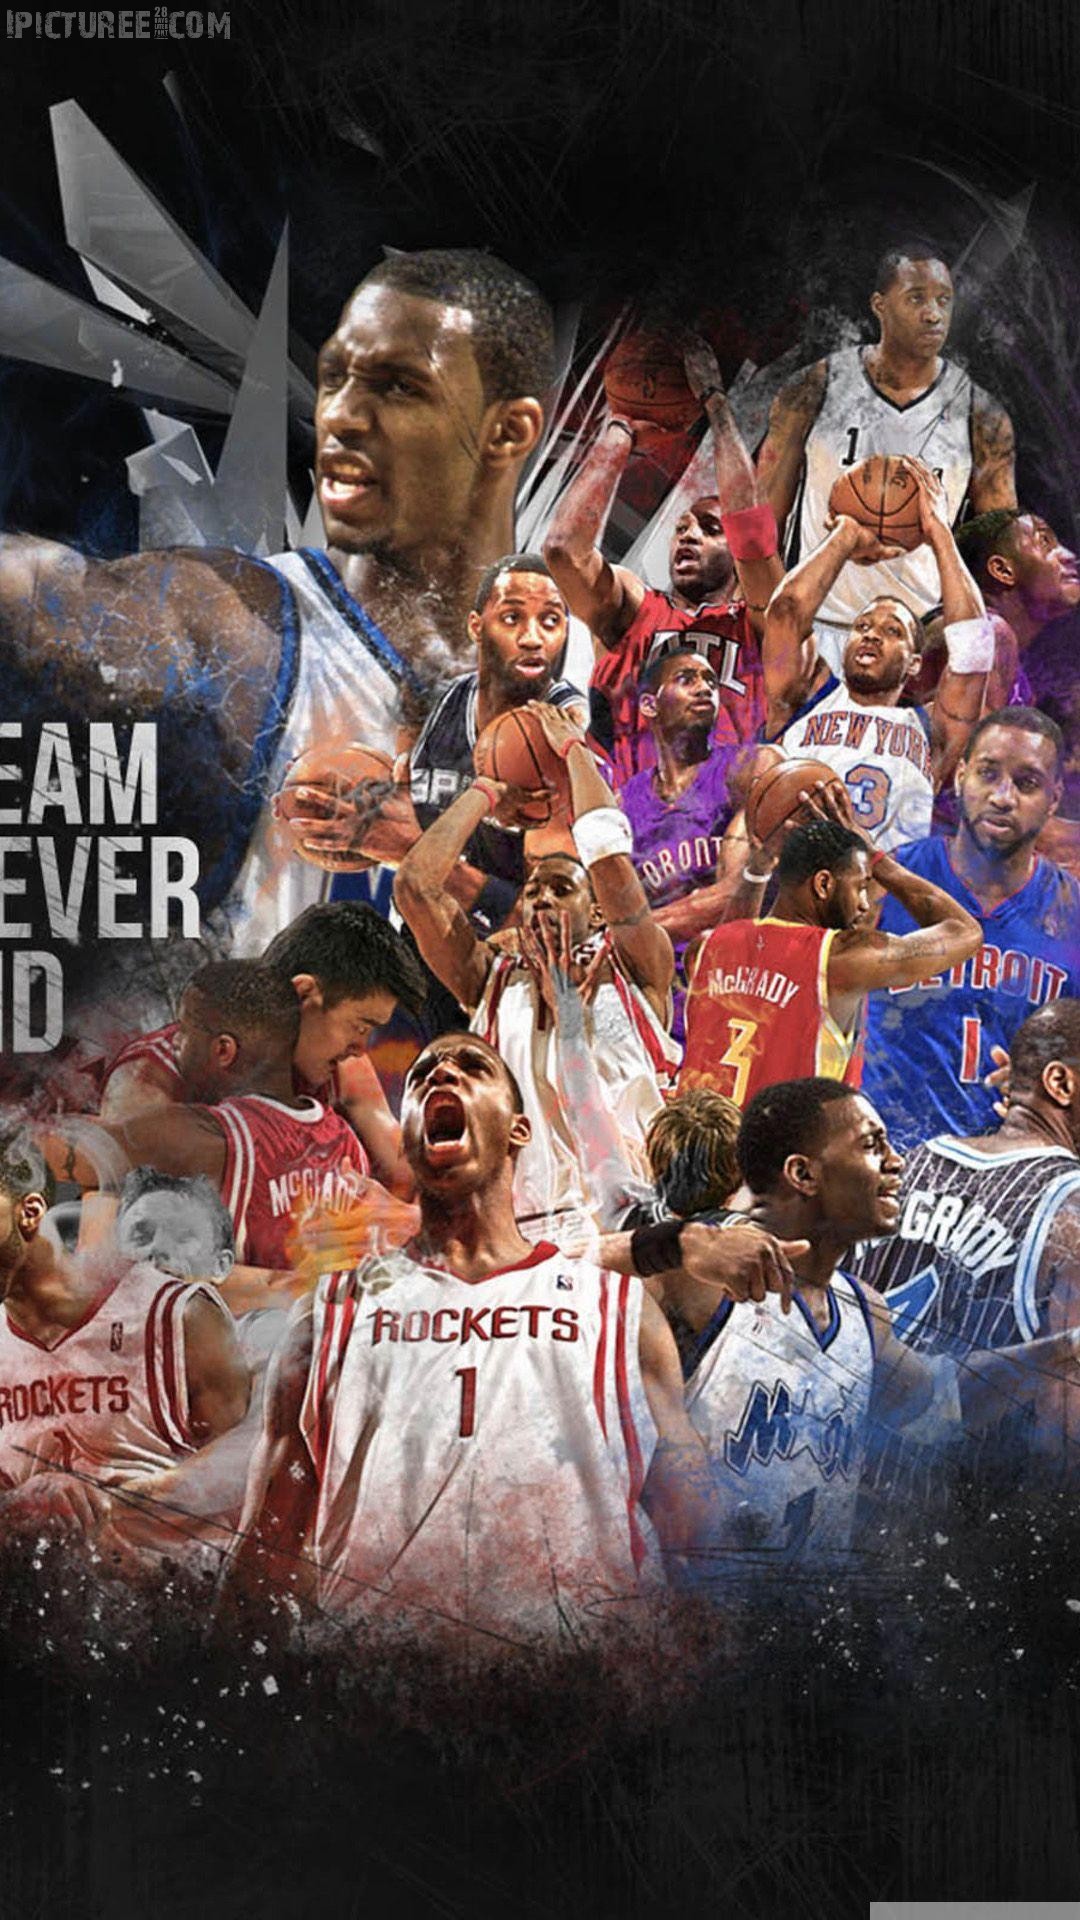 2012 NBA All-Star East Starters 2560×1600 Wallpaper